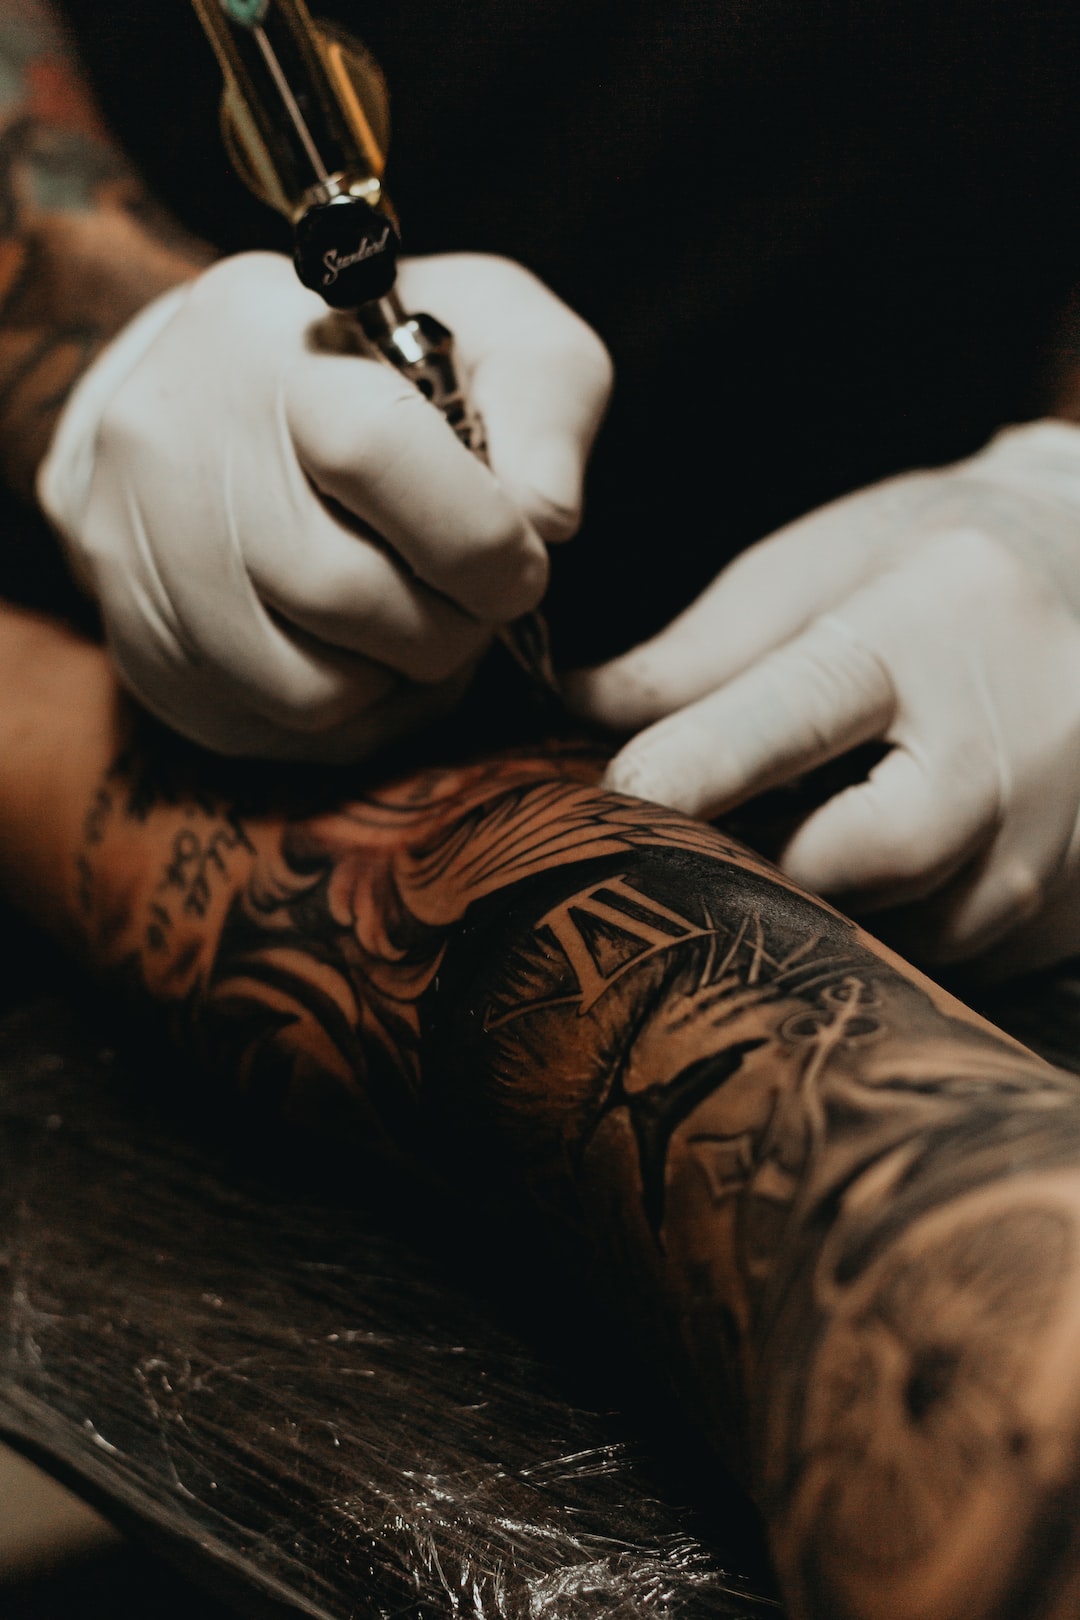 Full time tattoo artist - Falcon Ink